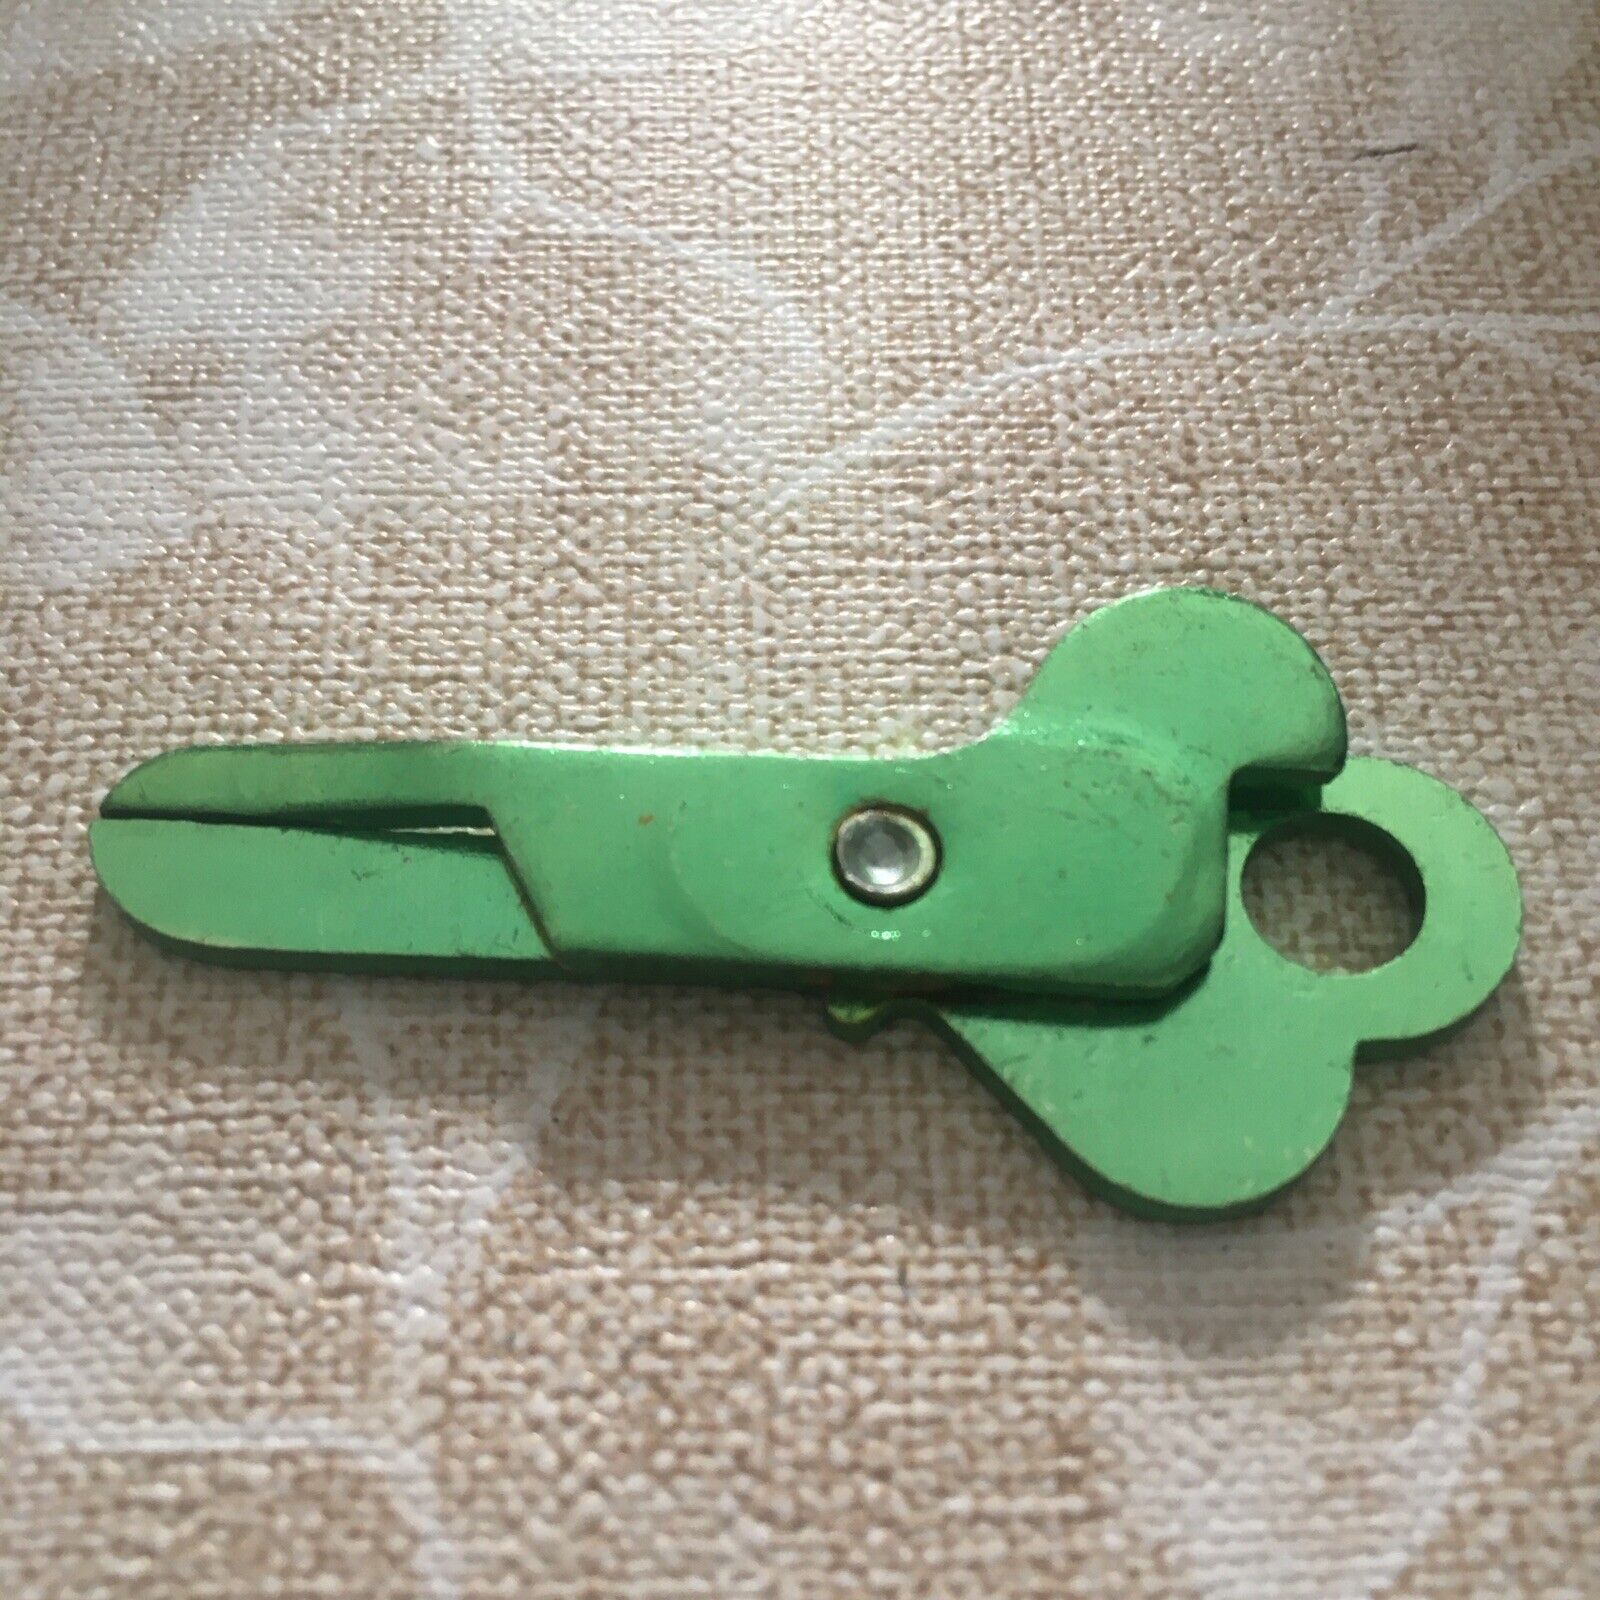 Vintage 70’s Roach Clip Key